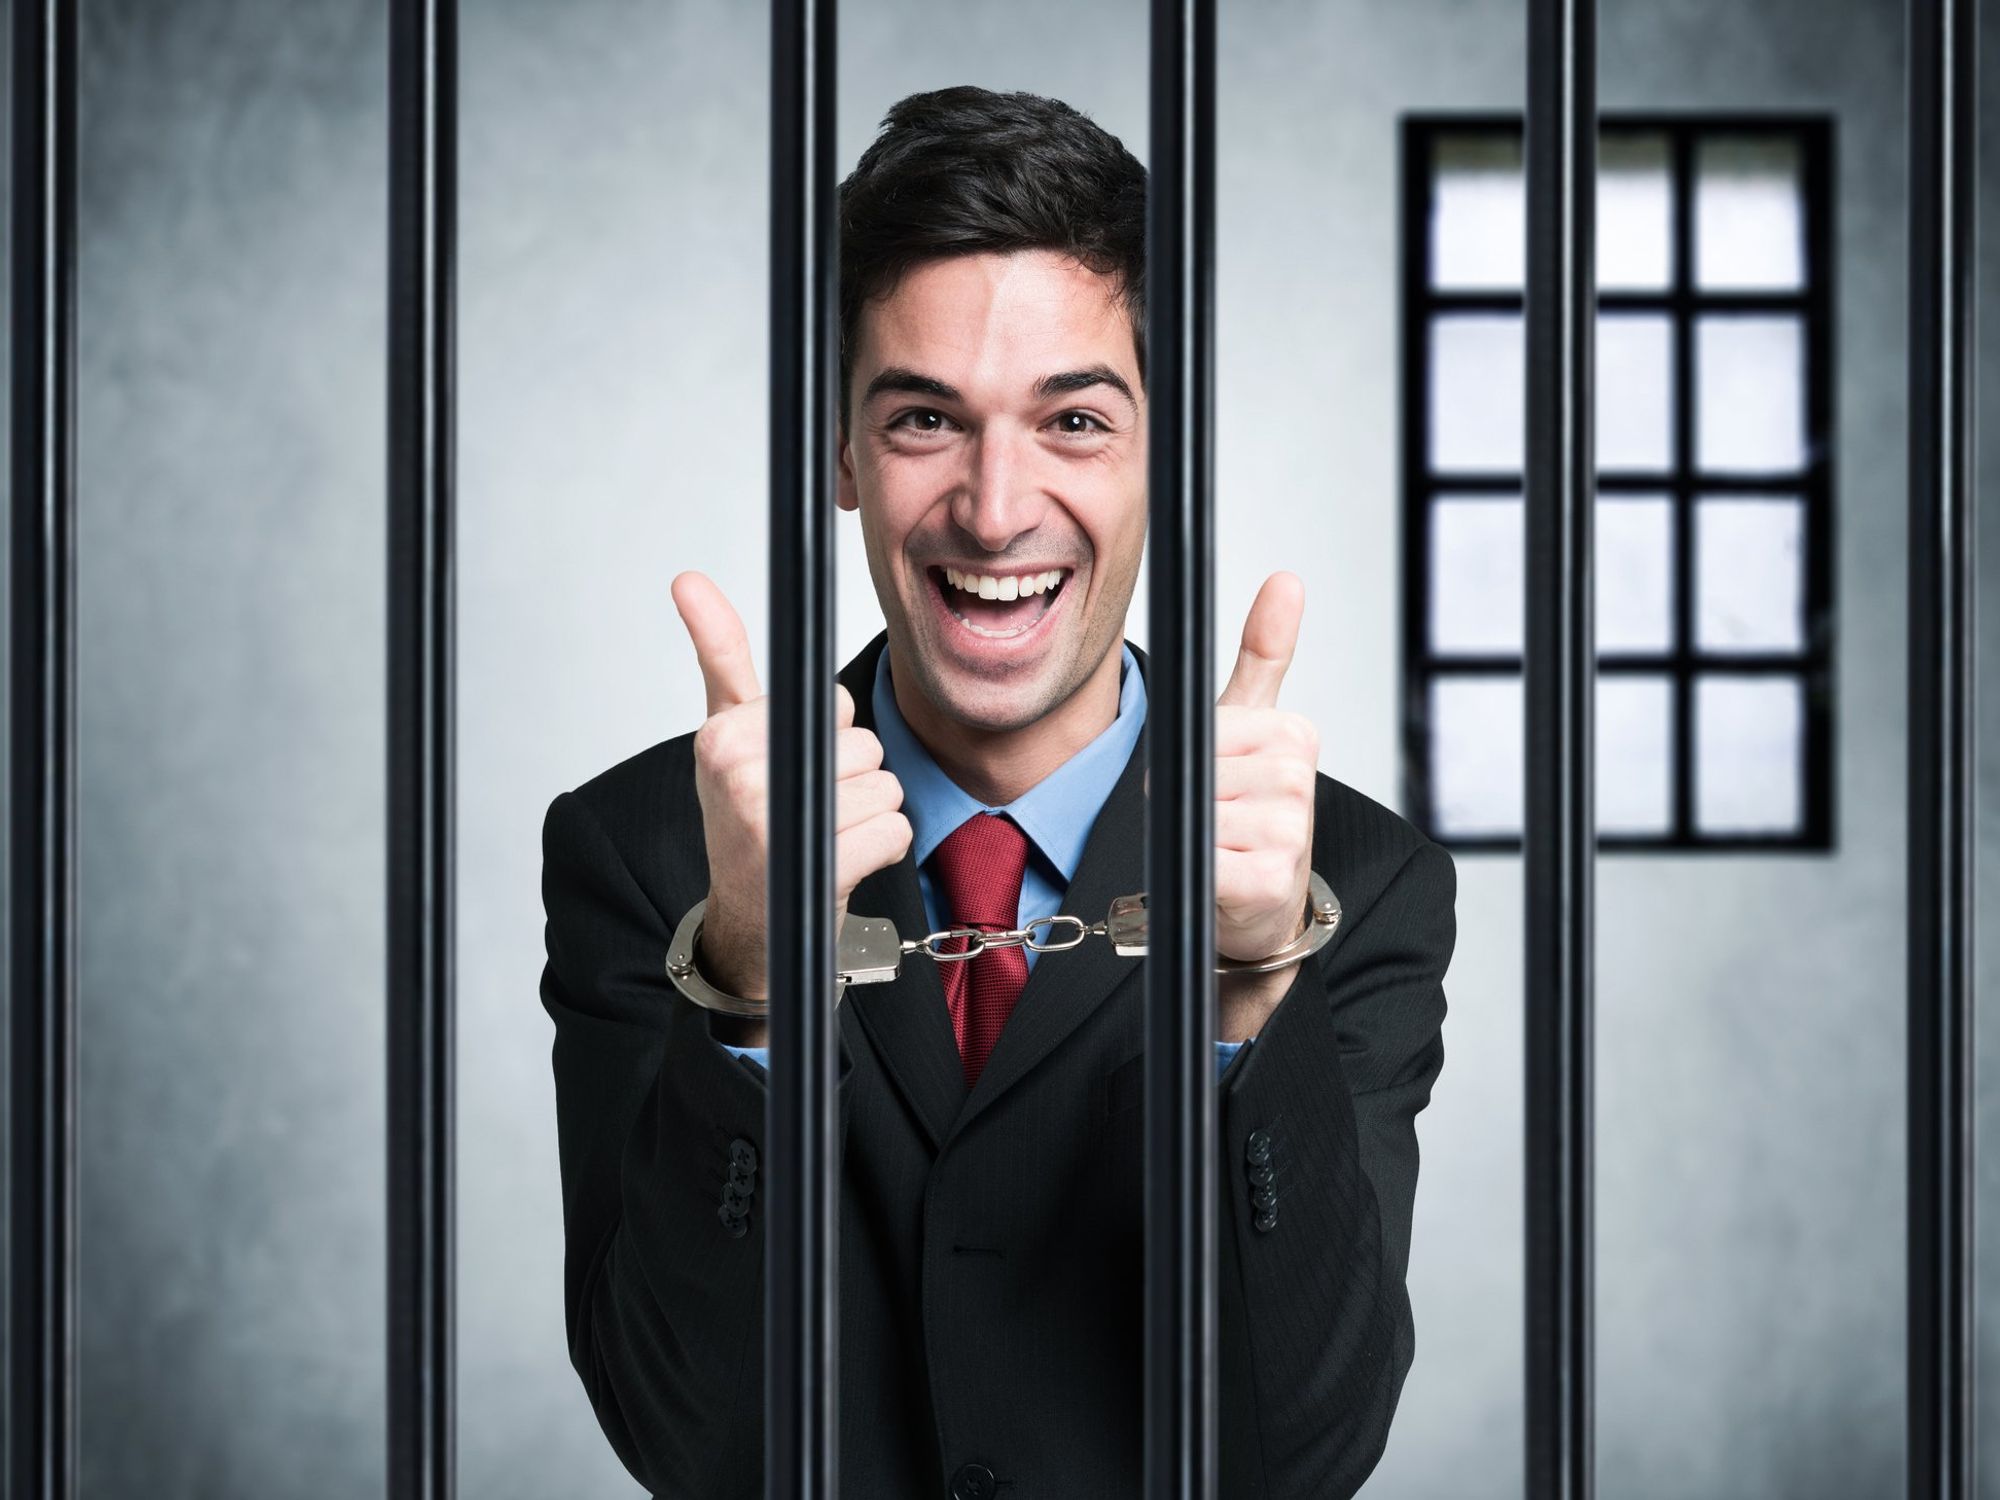 thumbs up prison politician businessman funny corrupt